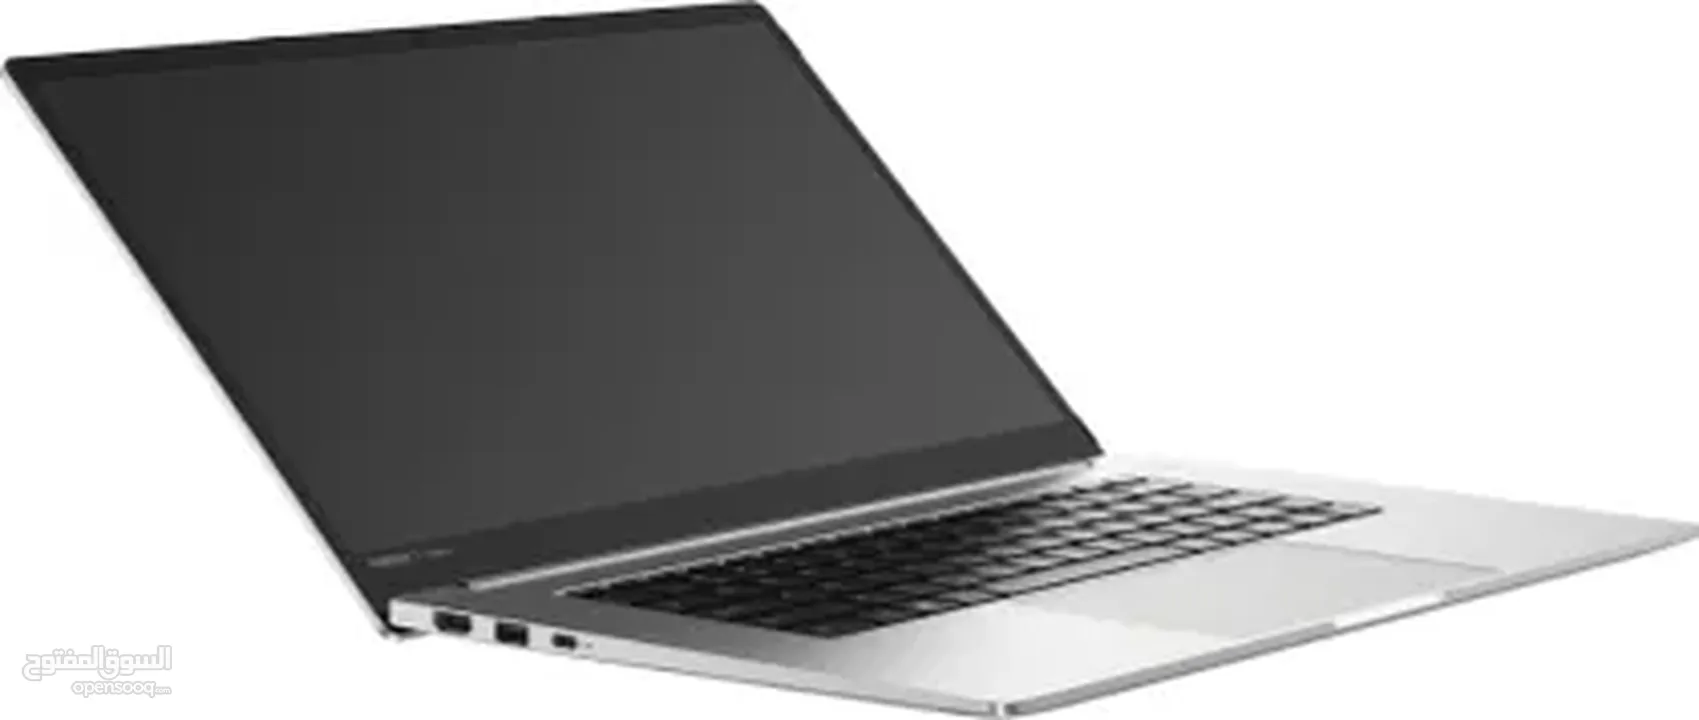 Infinix INBook Y1 Plus XL28 Laptop (10th Gen Core I5/ 8GB/ 512GB SSD/ Win 11)  لابتوب عرض بسعر خرافي